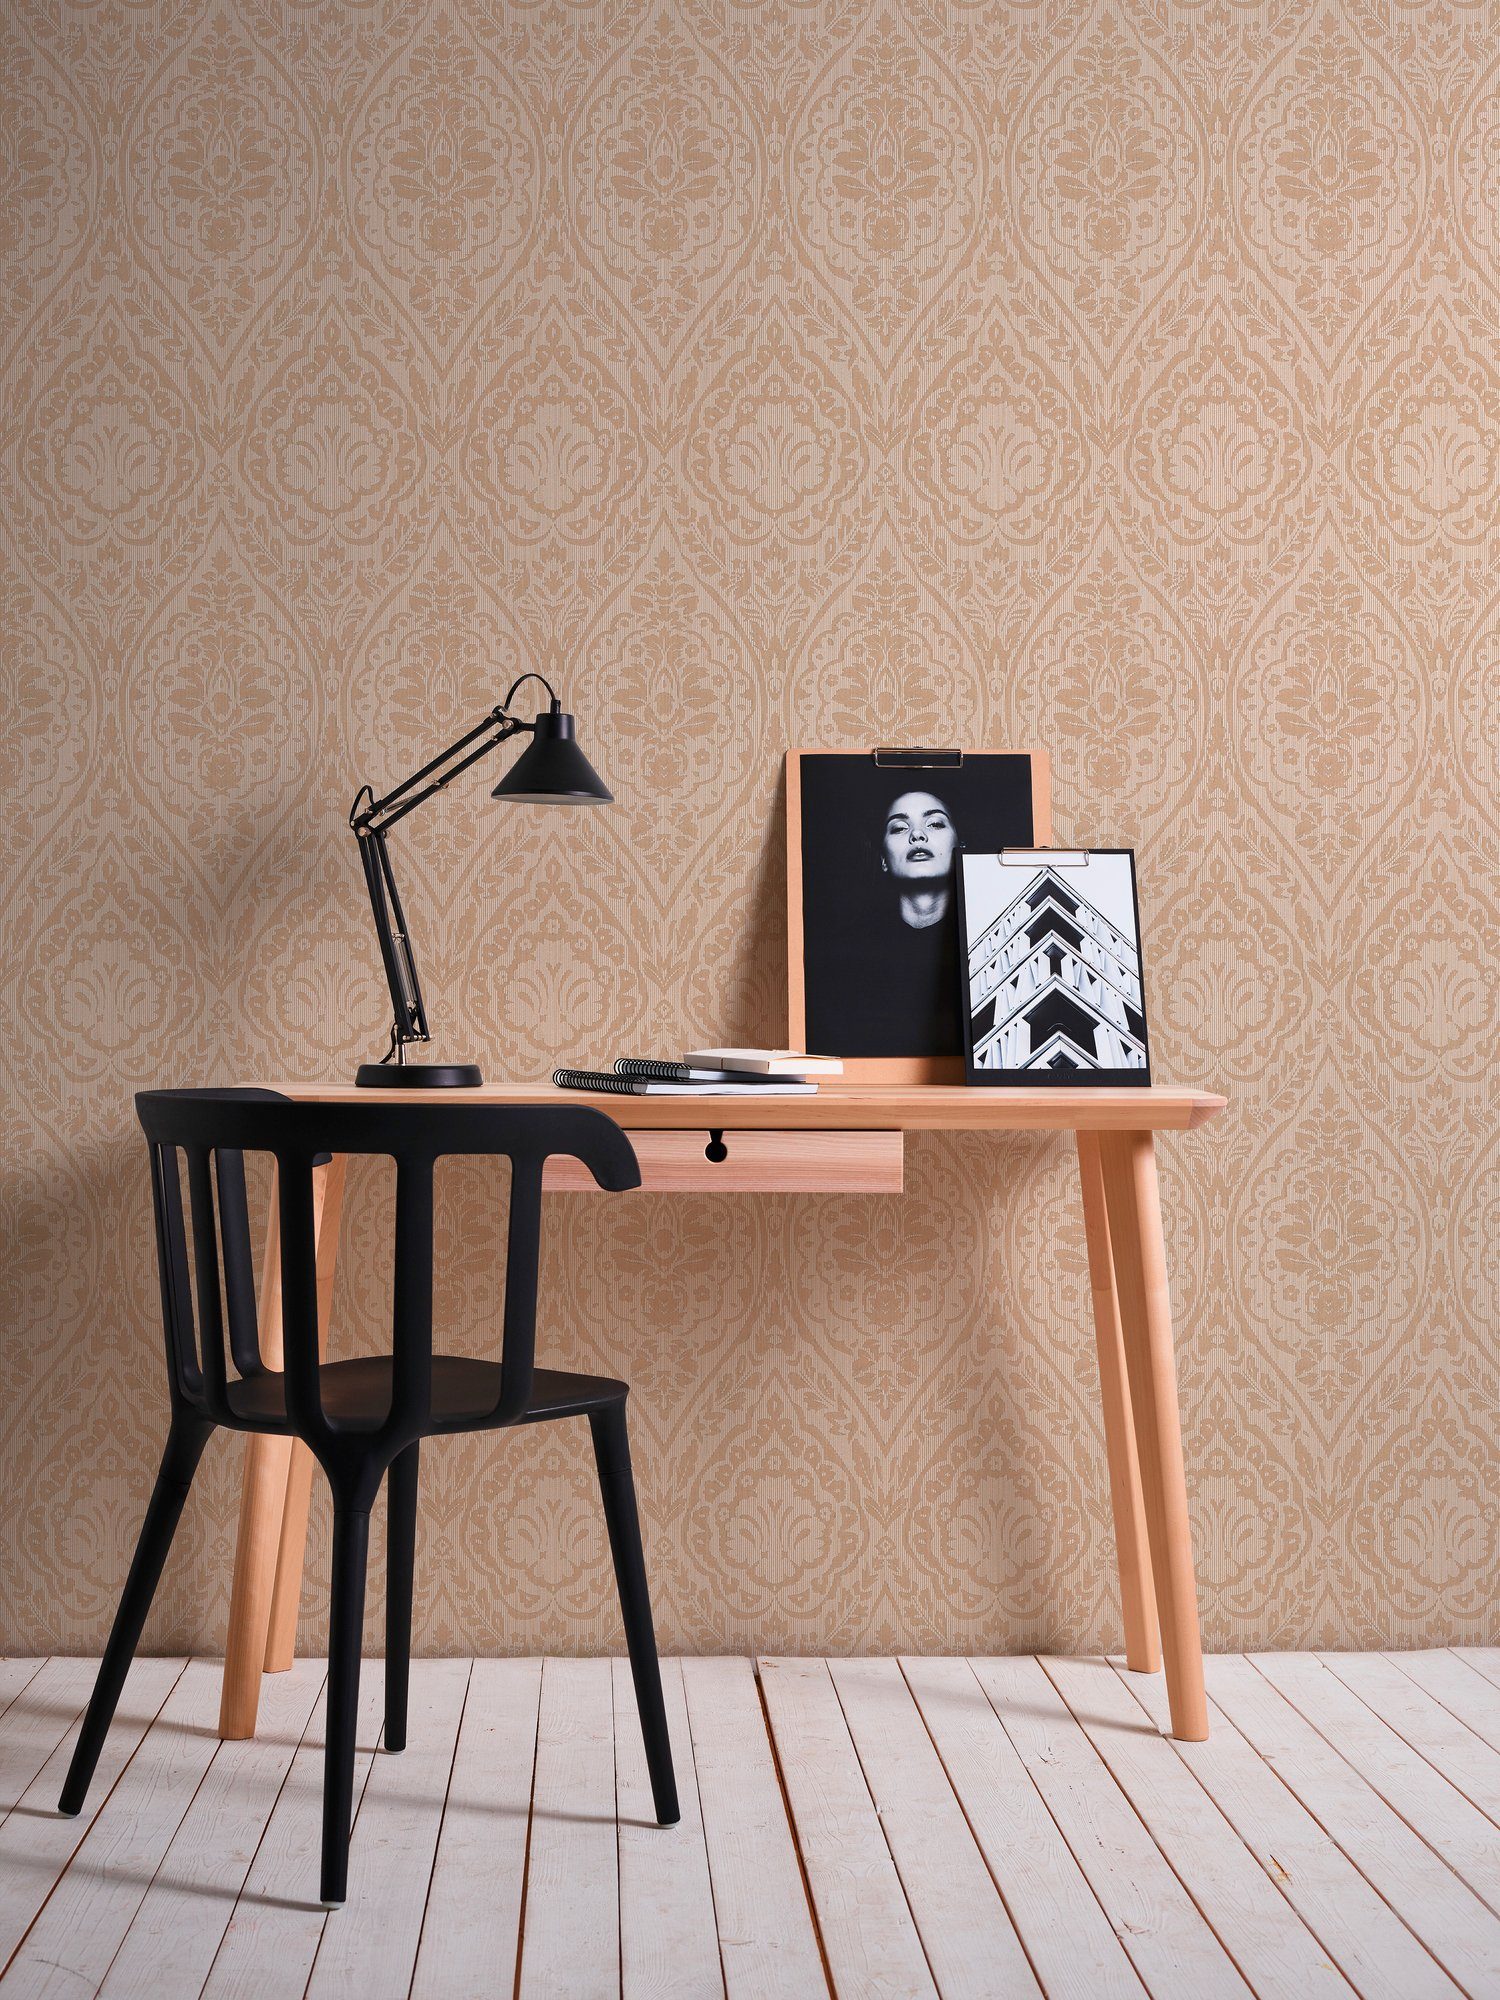 Paper samtig, Textiltapete Tapete A.S. beige Création Architects Streifen Barock, Tessuto,